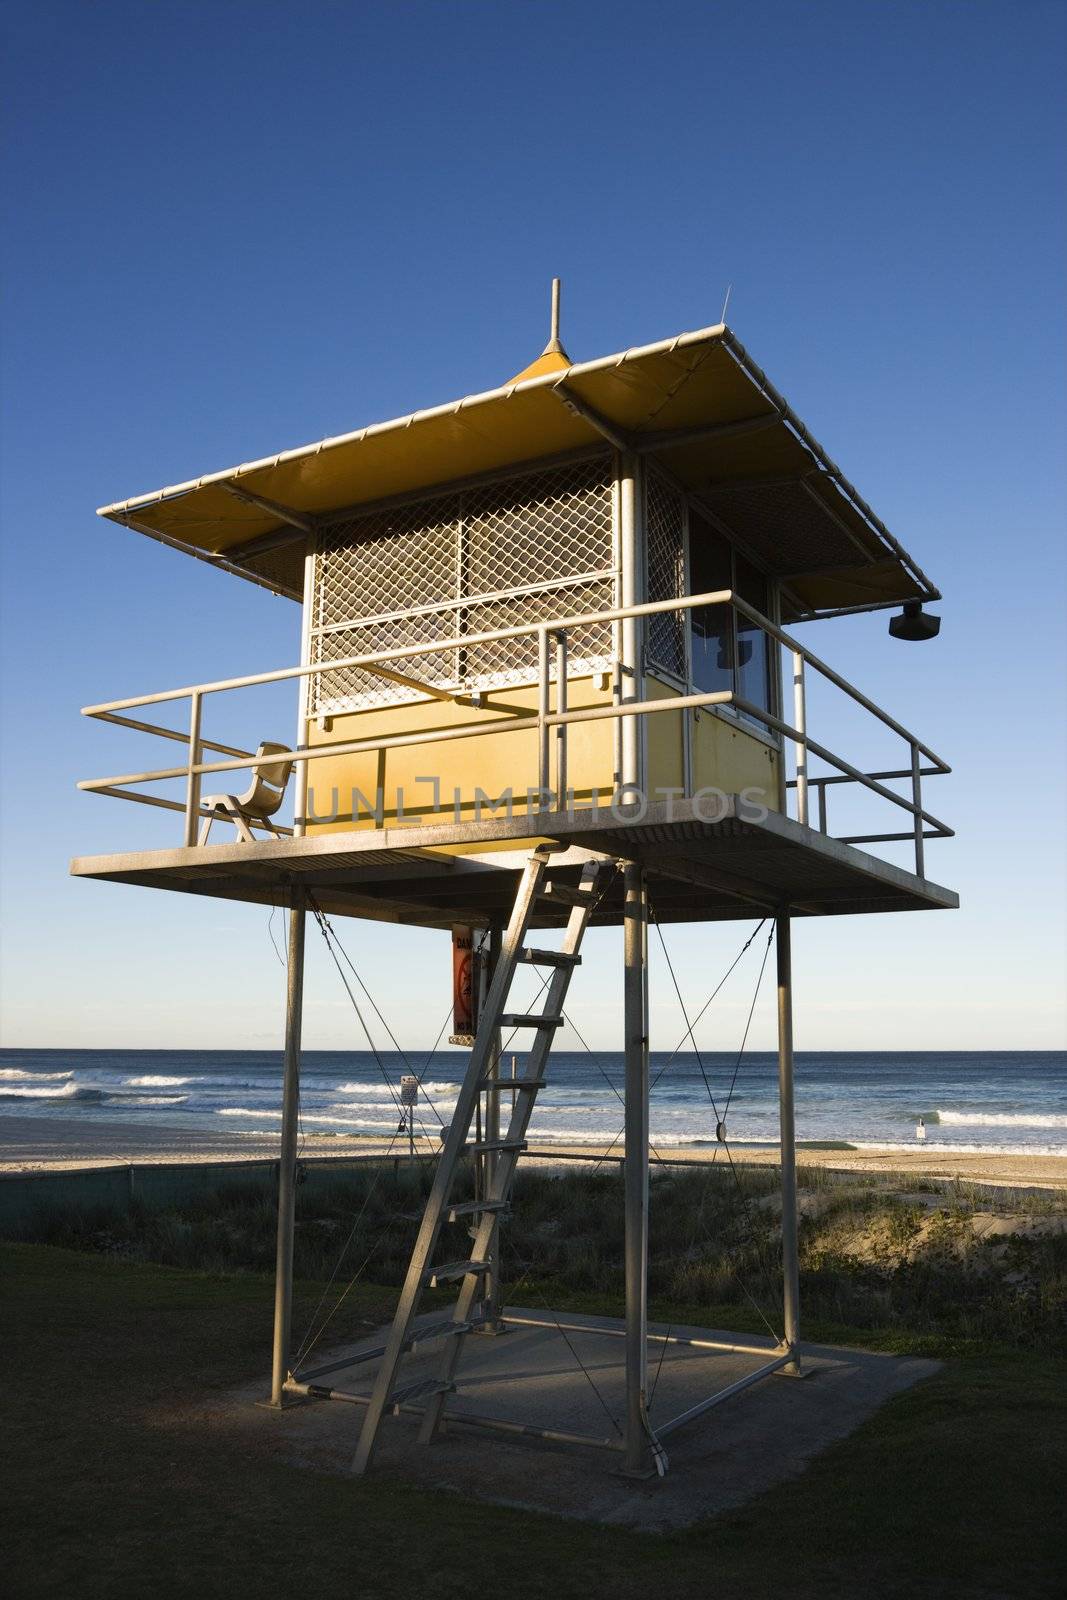 Lifeguard shack on beach on Surfers Paradise, Australia.